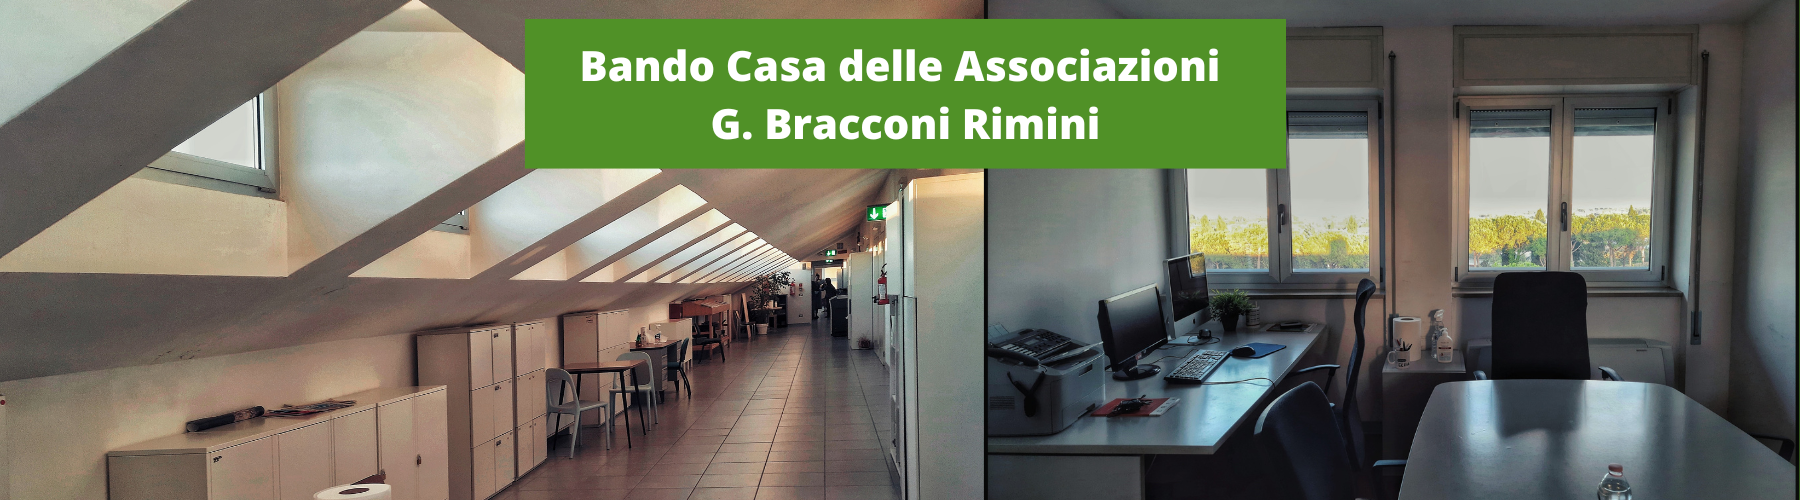 Bando 2022 - Spazi Casa Associazioni G. Bracconi